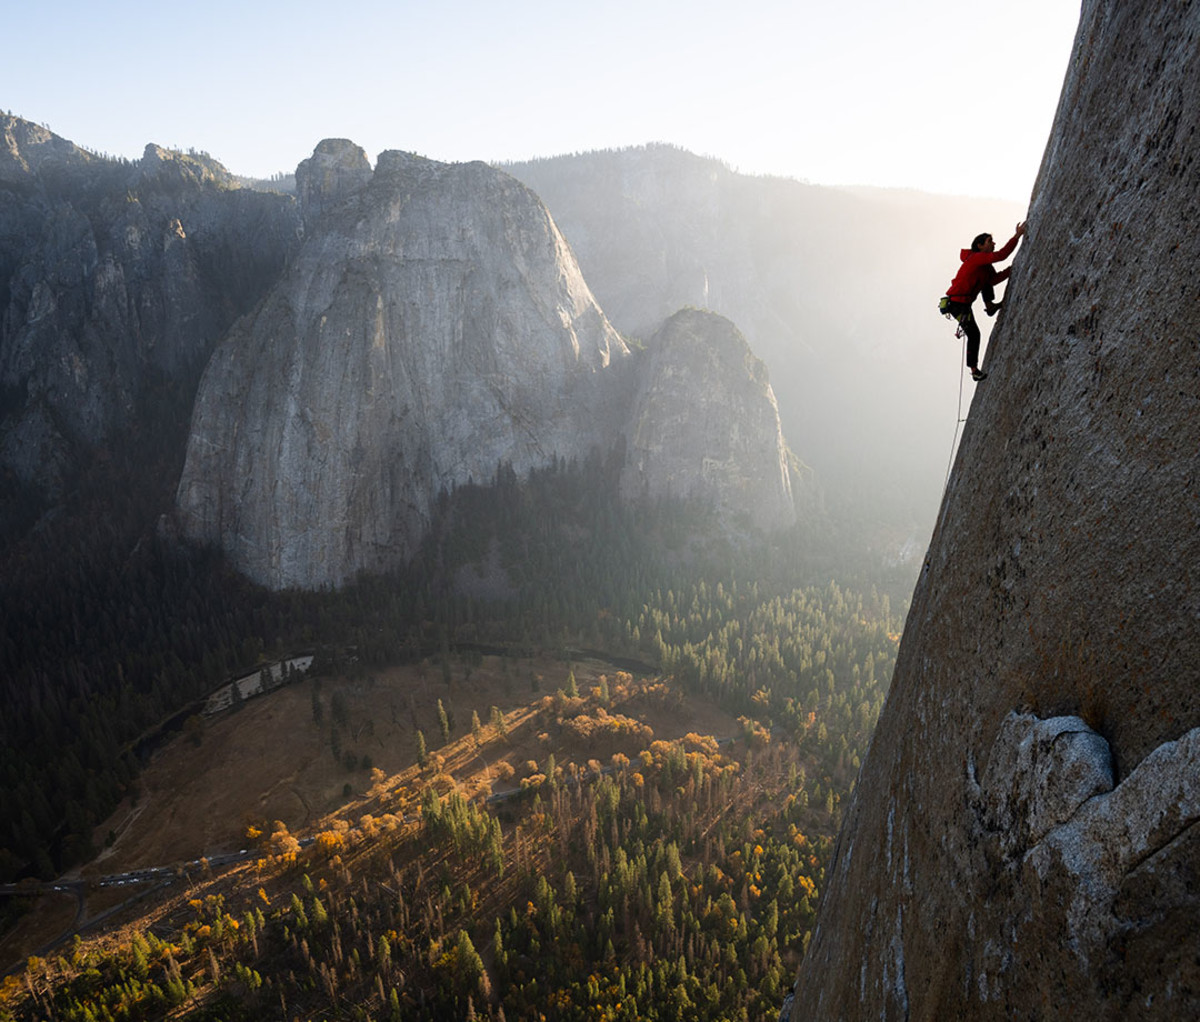 Alex Honnold climbing El Cap via the Passage to Freedom